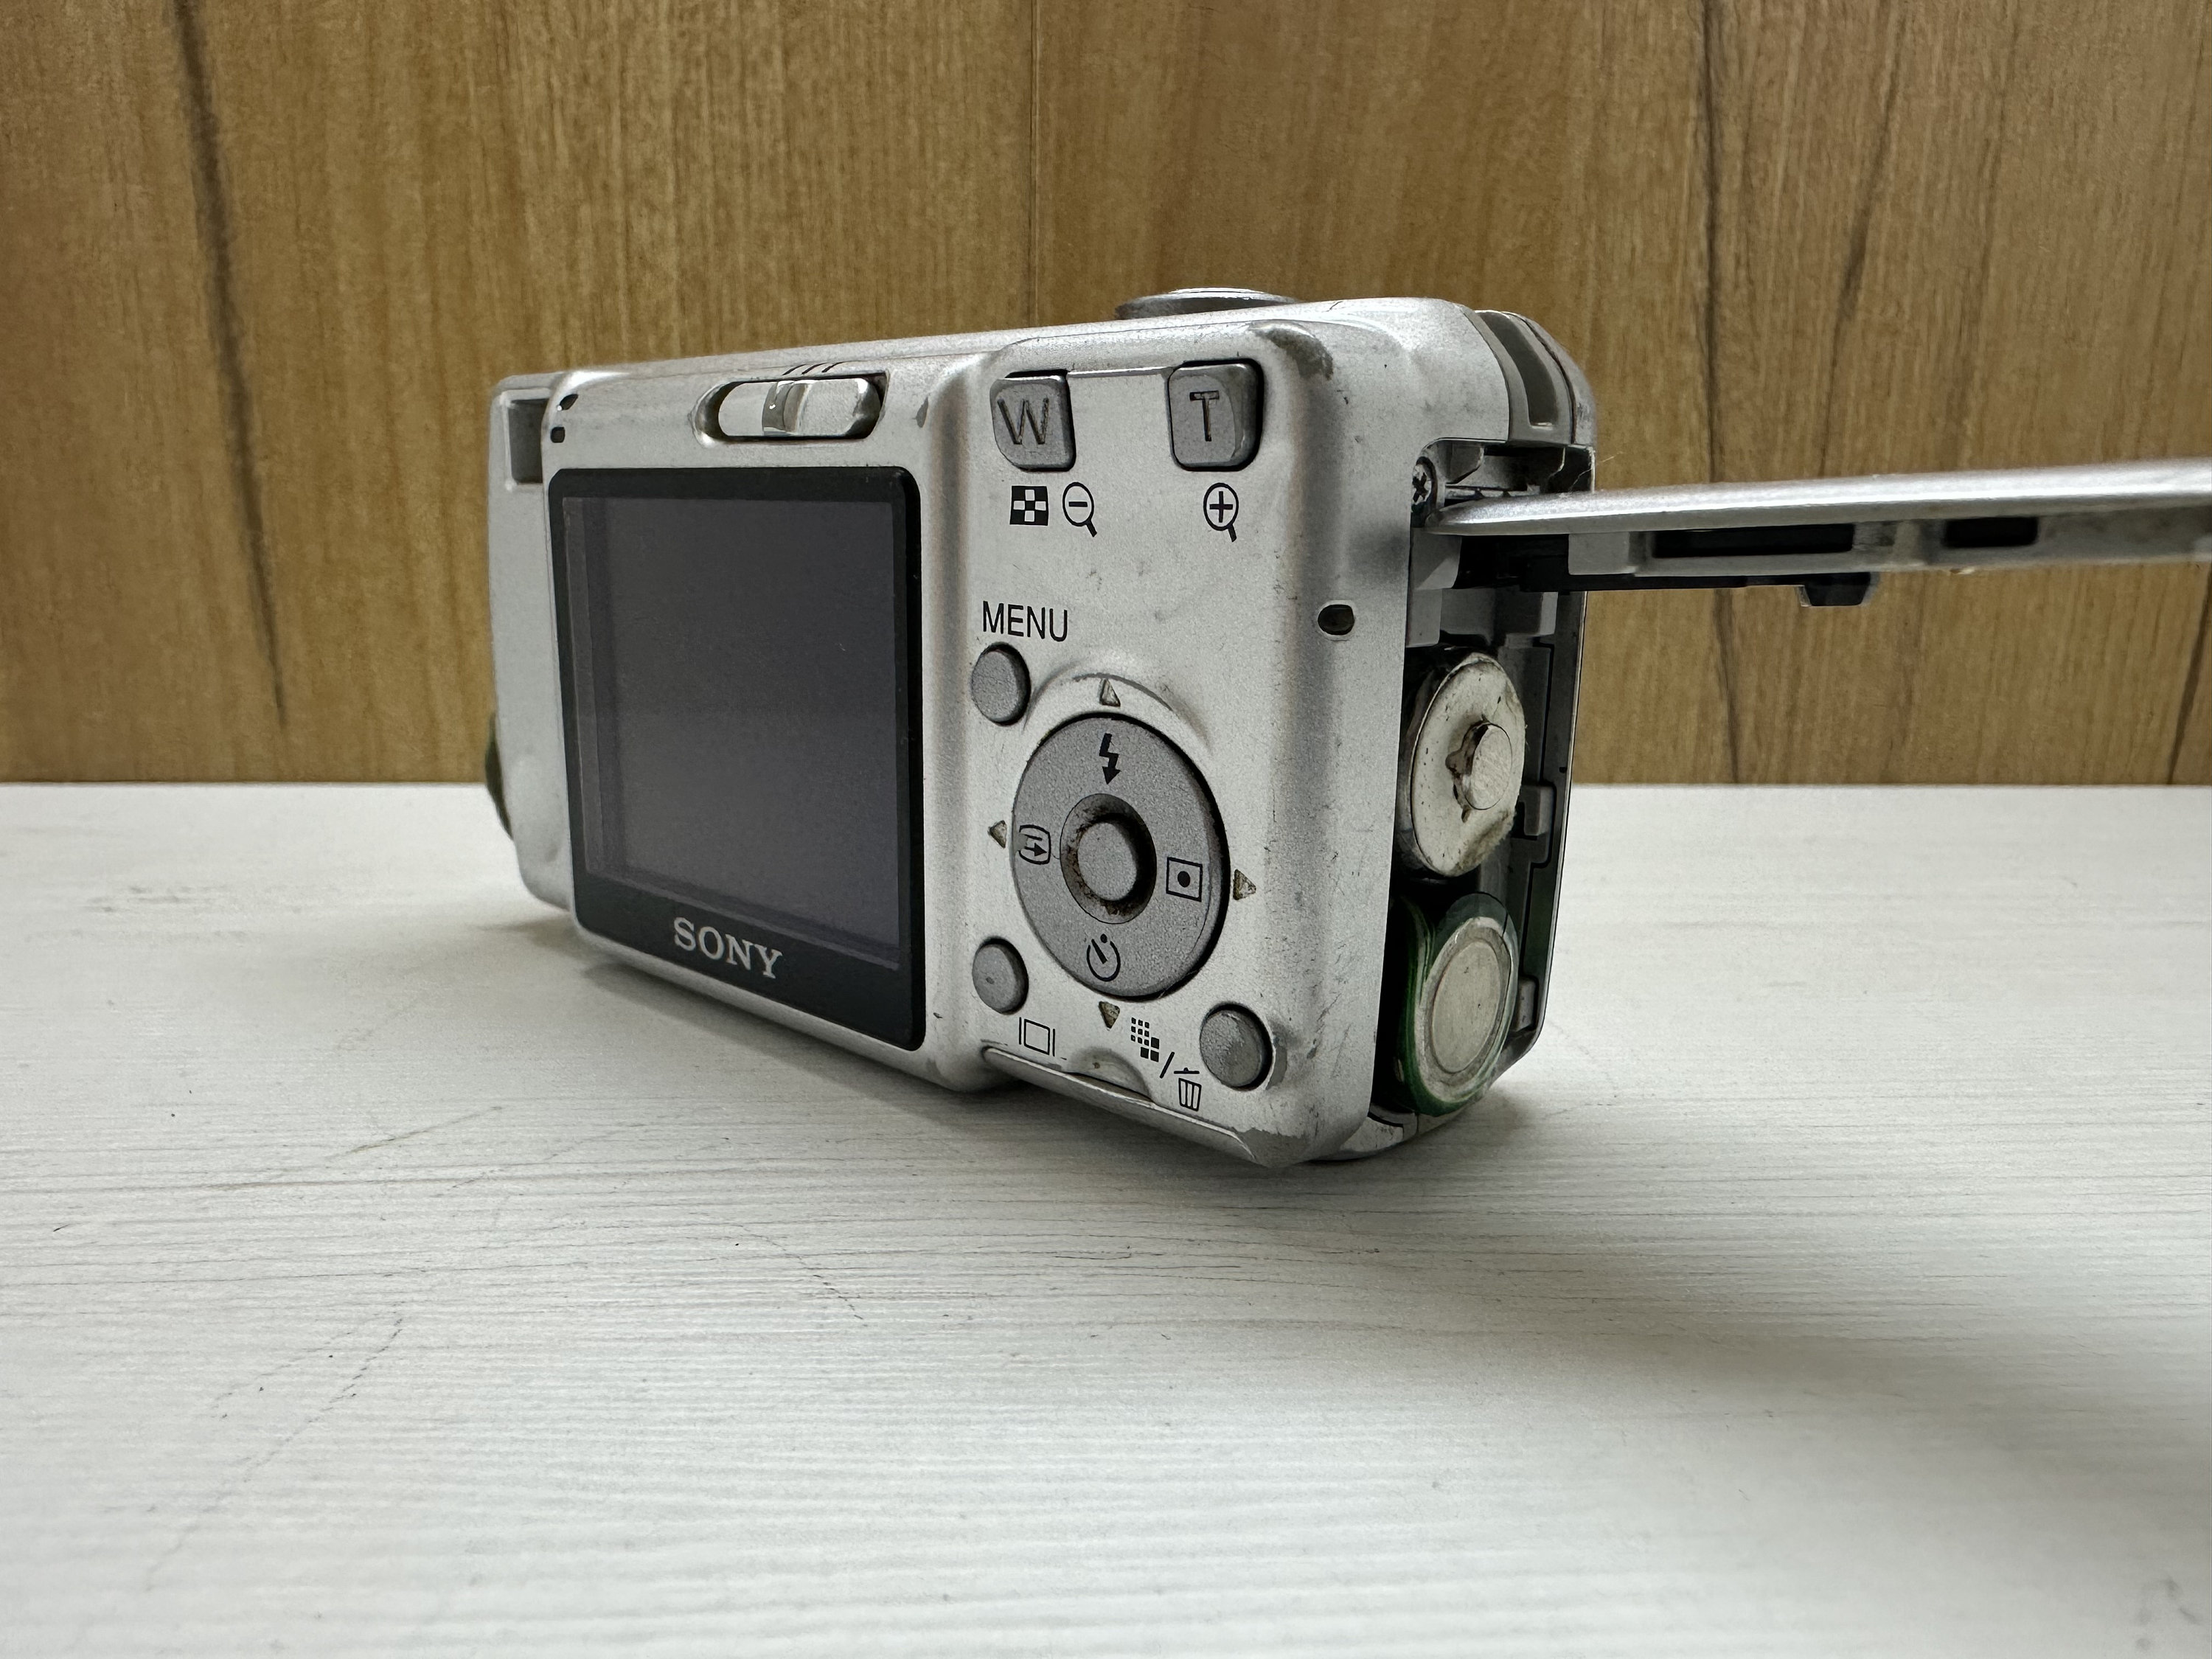 Sony Cybershot DSC-S600 6MP Digital Camera with 3x Optical Zoom